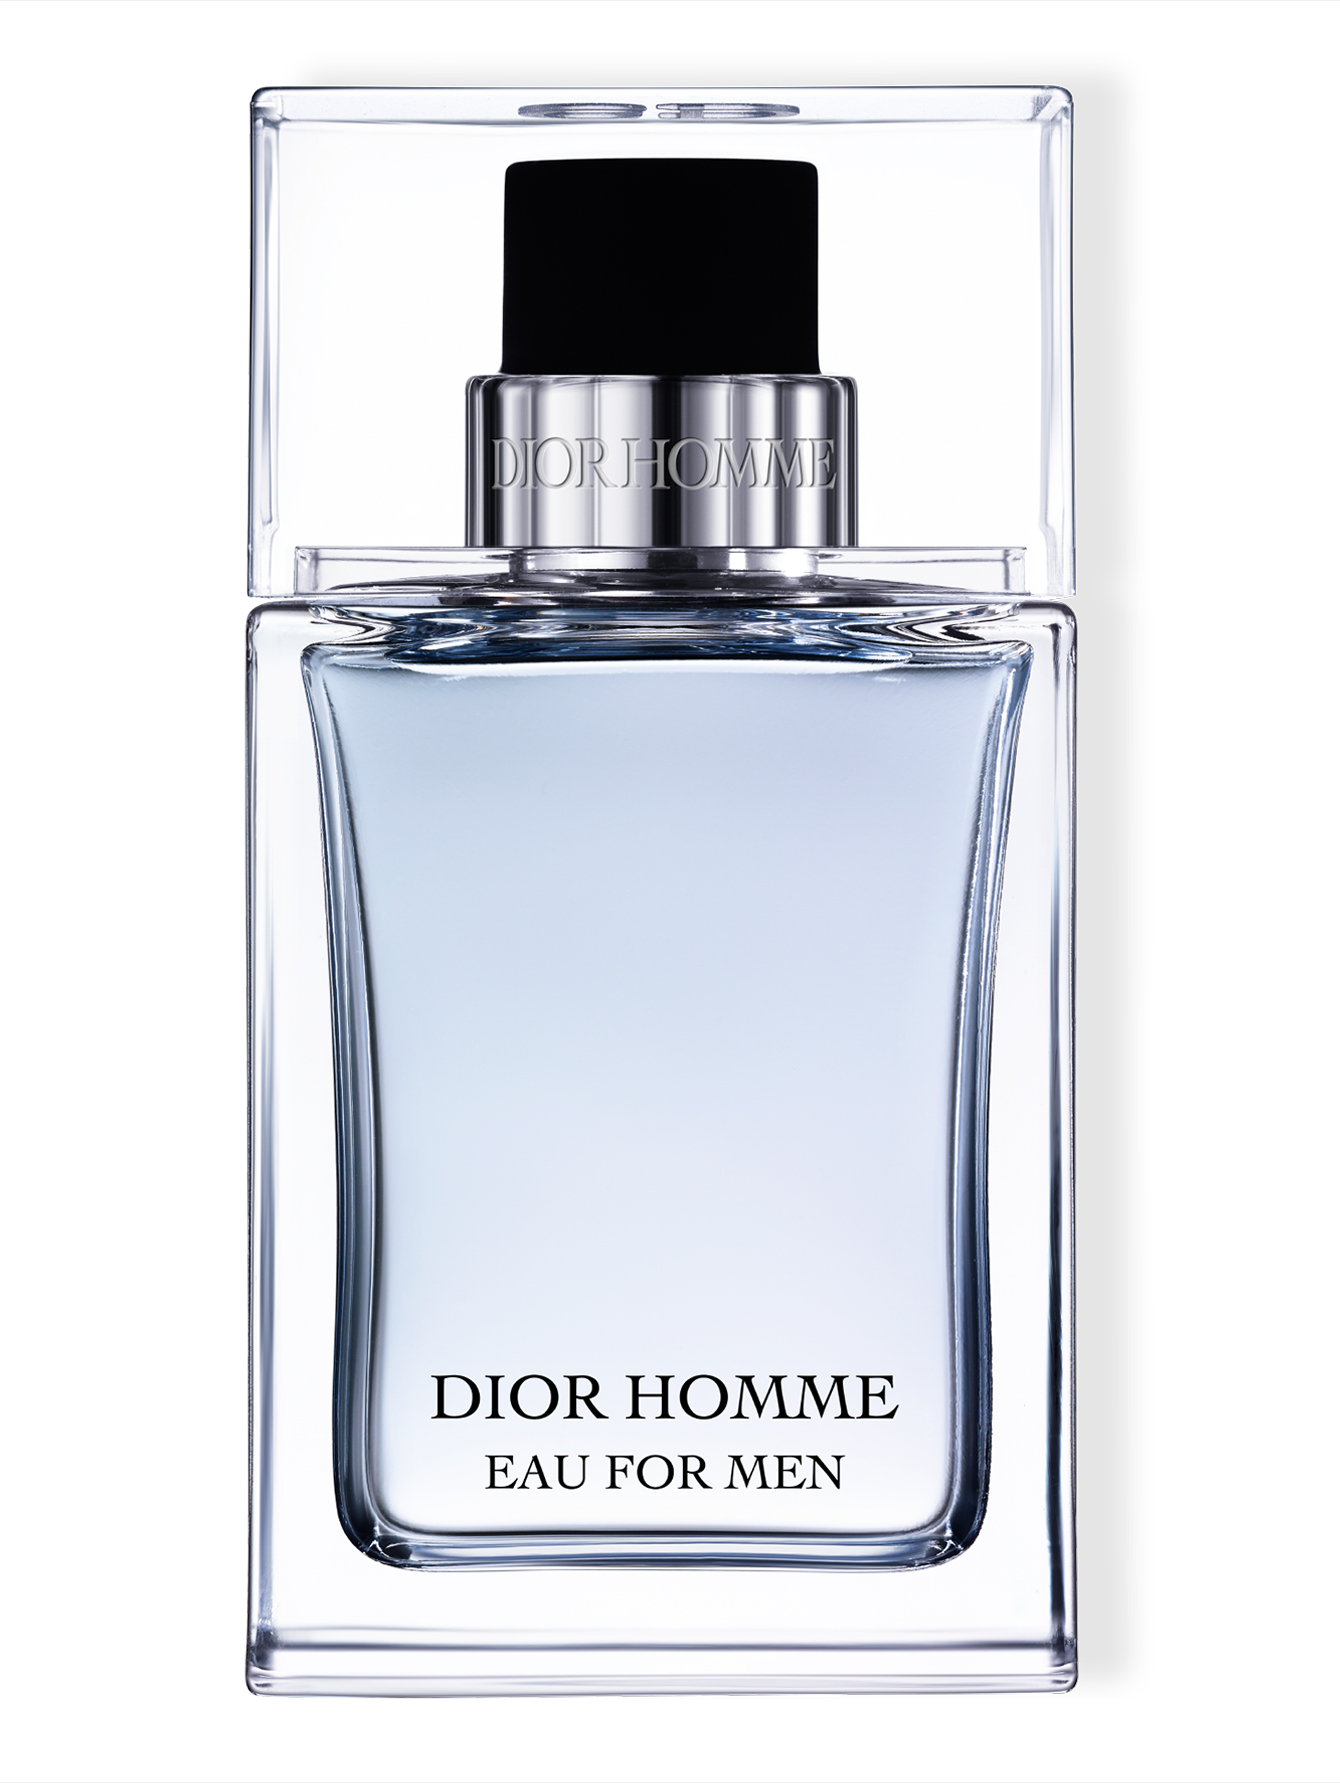 Dior homme купить мужской. Christian Dior Dior homme Eau for men. Christian Dior homme Eau for men 100ml. Dior homme туалетная вода 100 мл. Духи Christian Dior Colon for men.